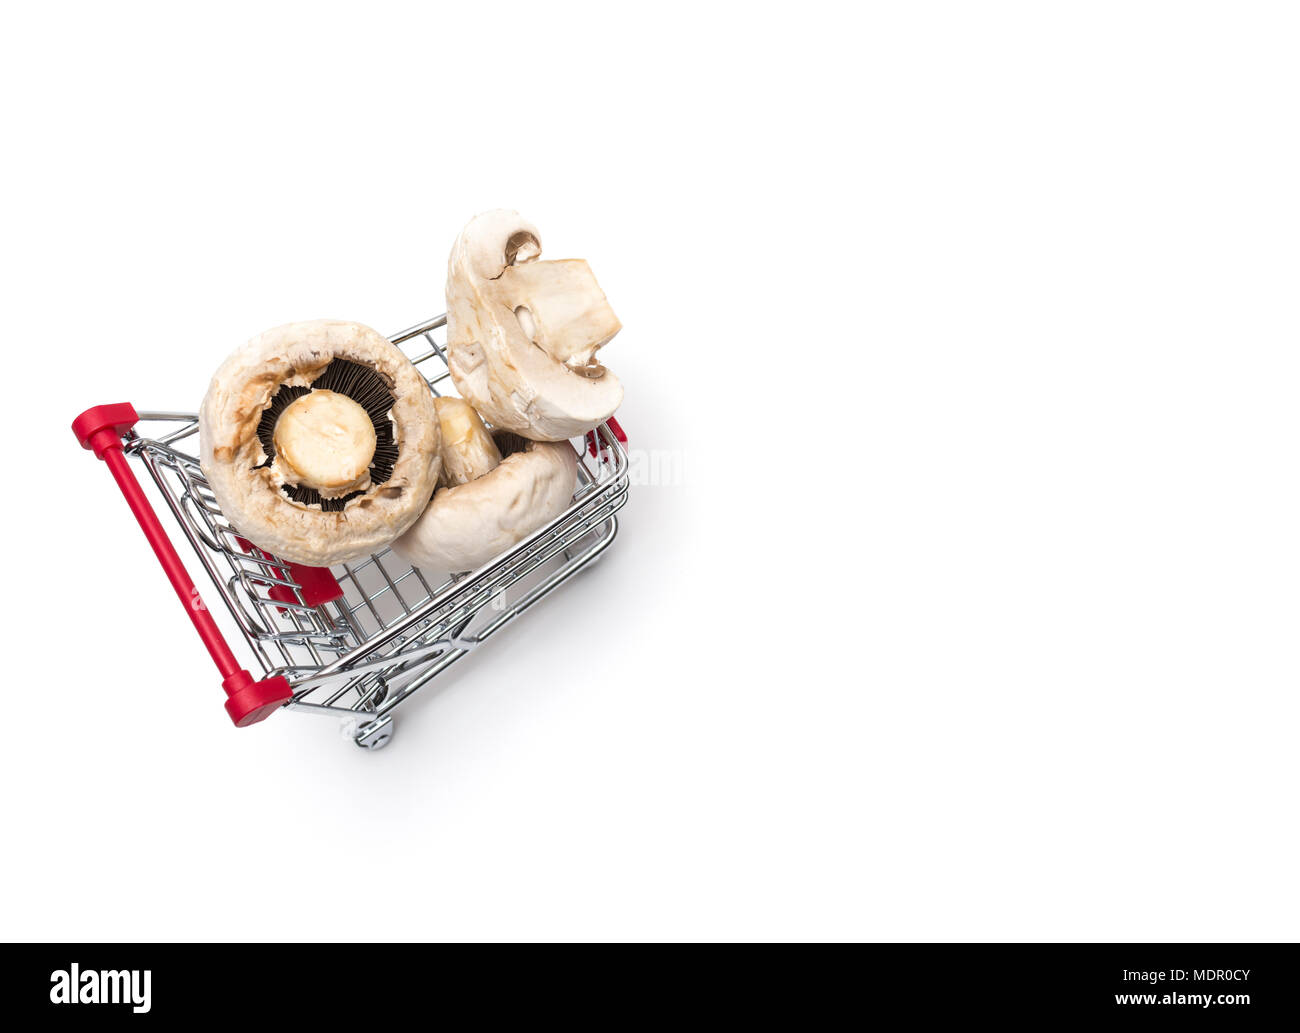 Buying a mushroom from supermarket Mushroom harvest, white mushrooms Stock Photo